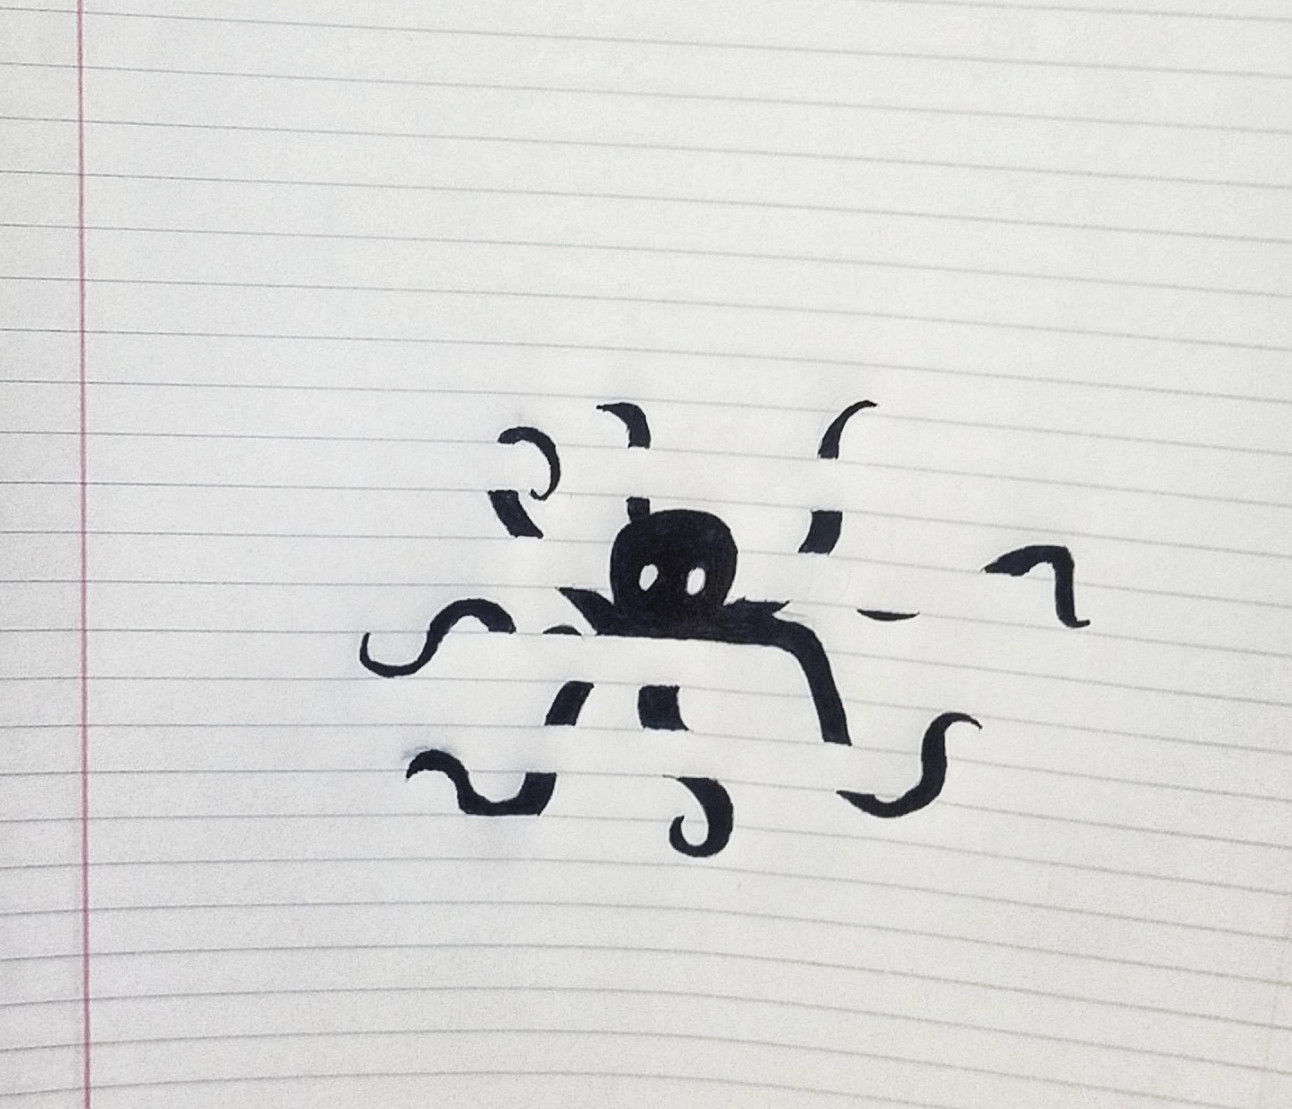 drew an octopus on lined paper : r/mildlyinteresting